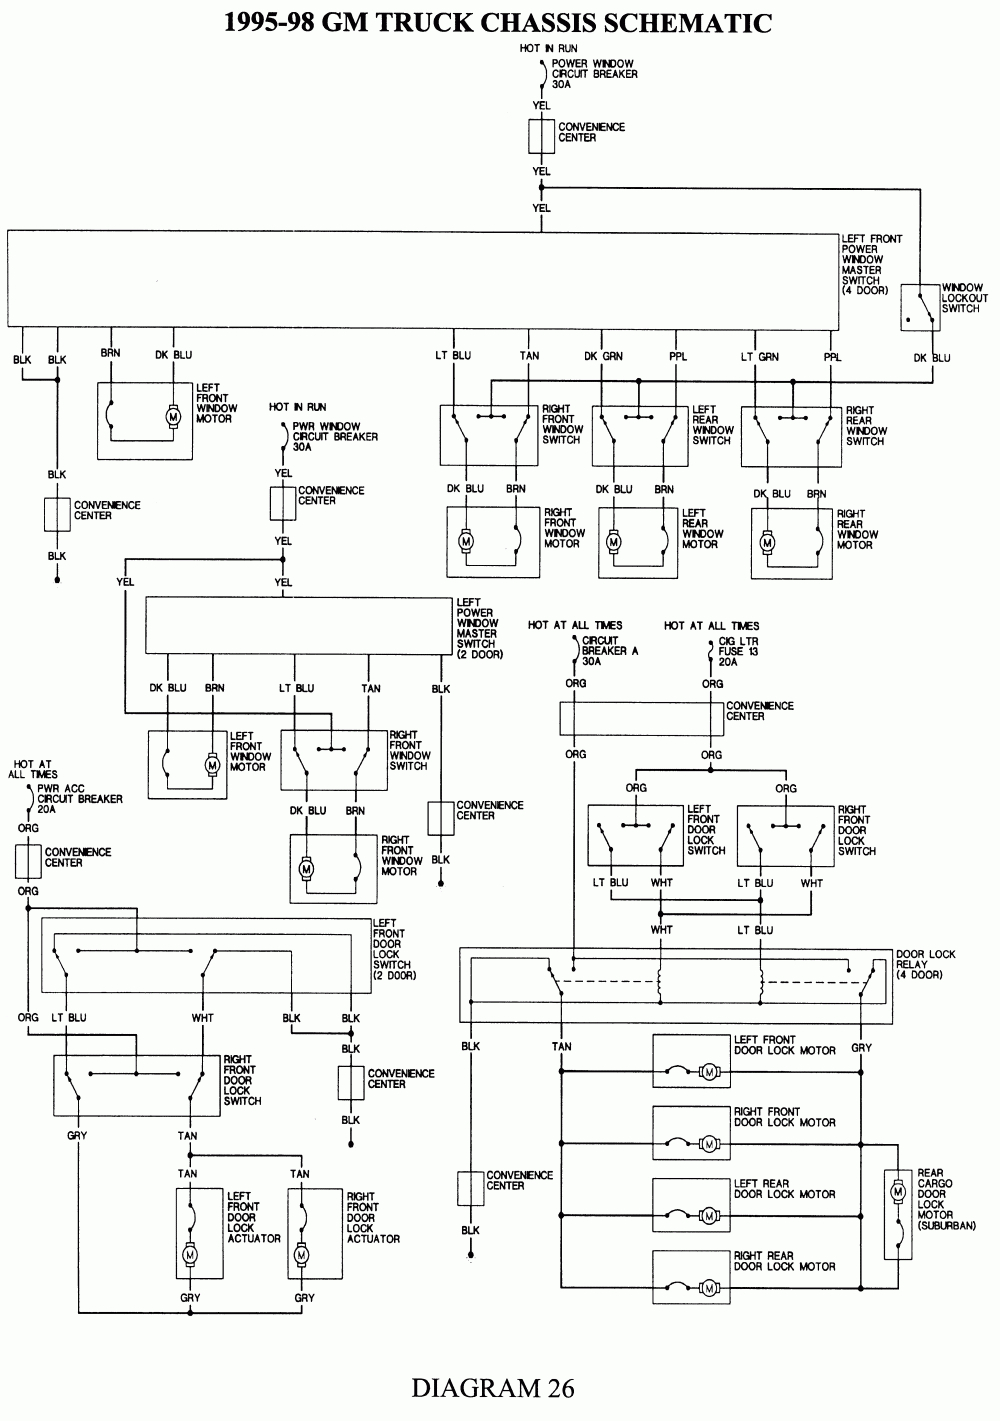 1992 Chevy Truck Wiring Diagram
